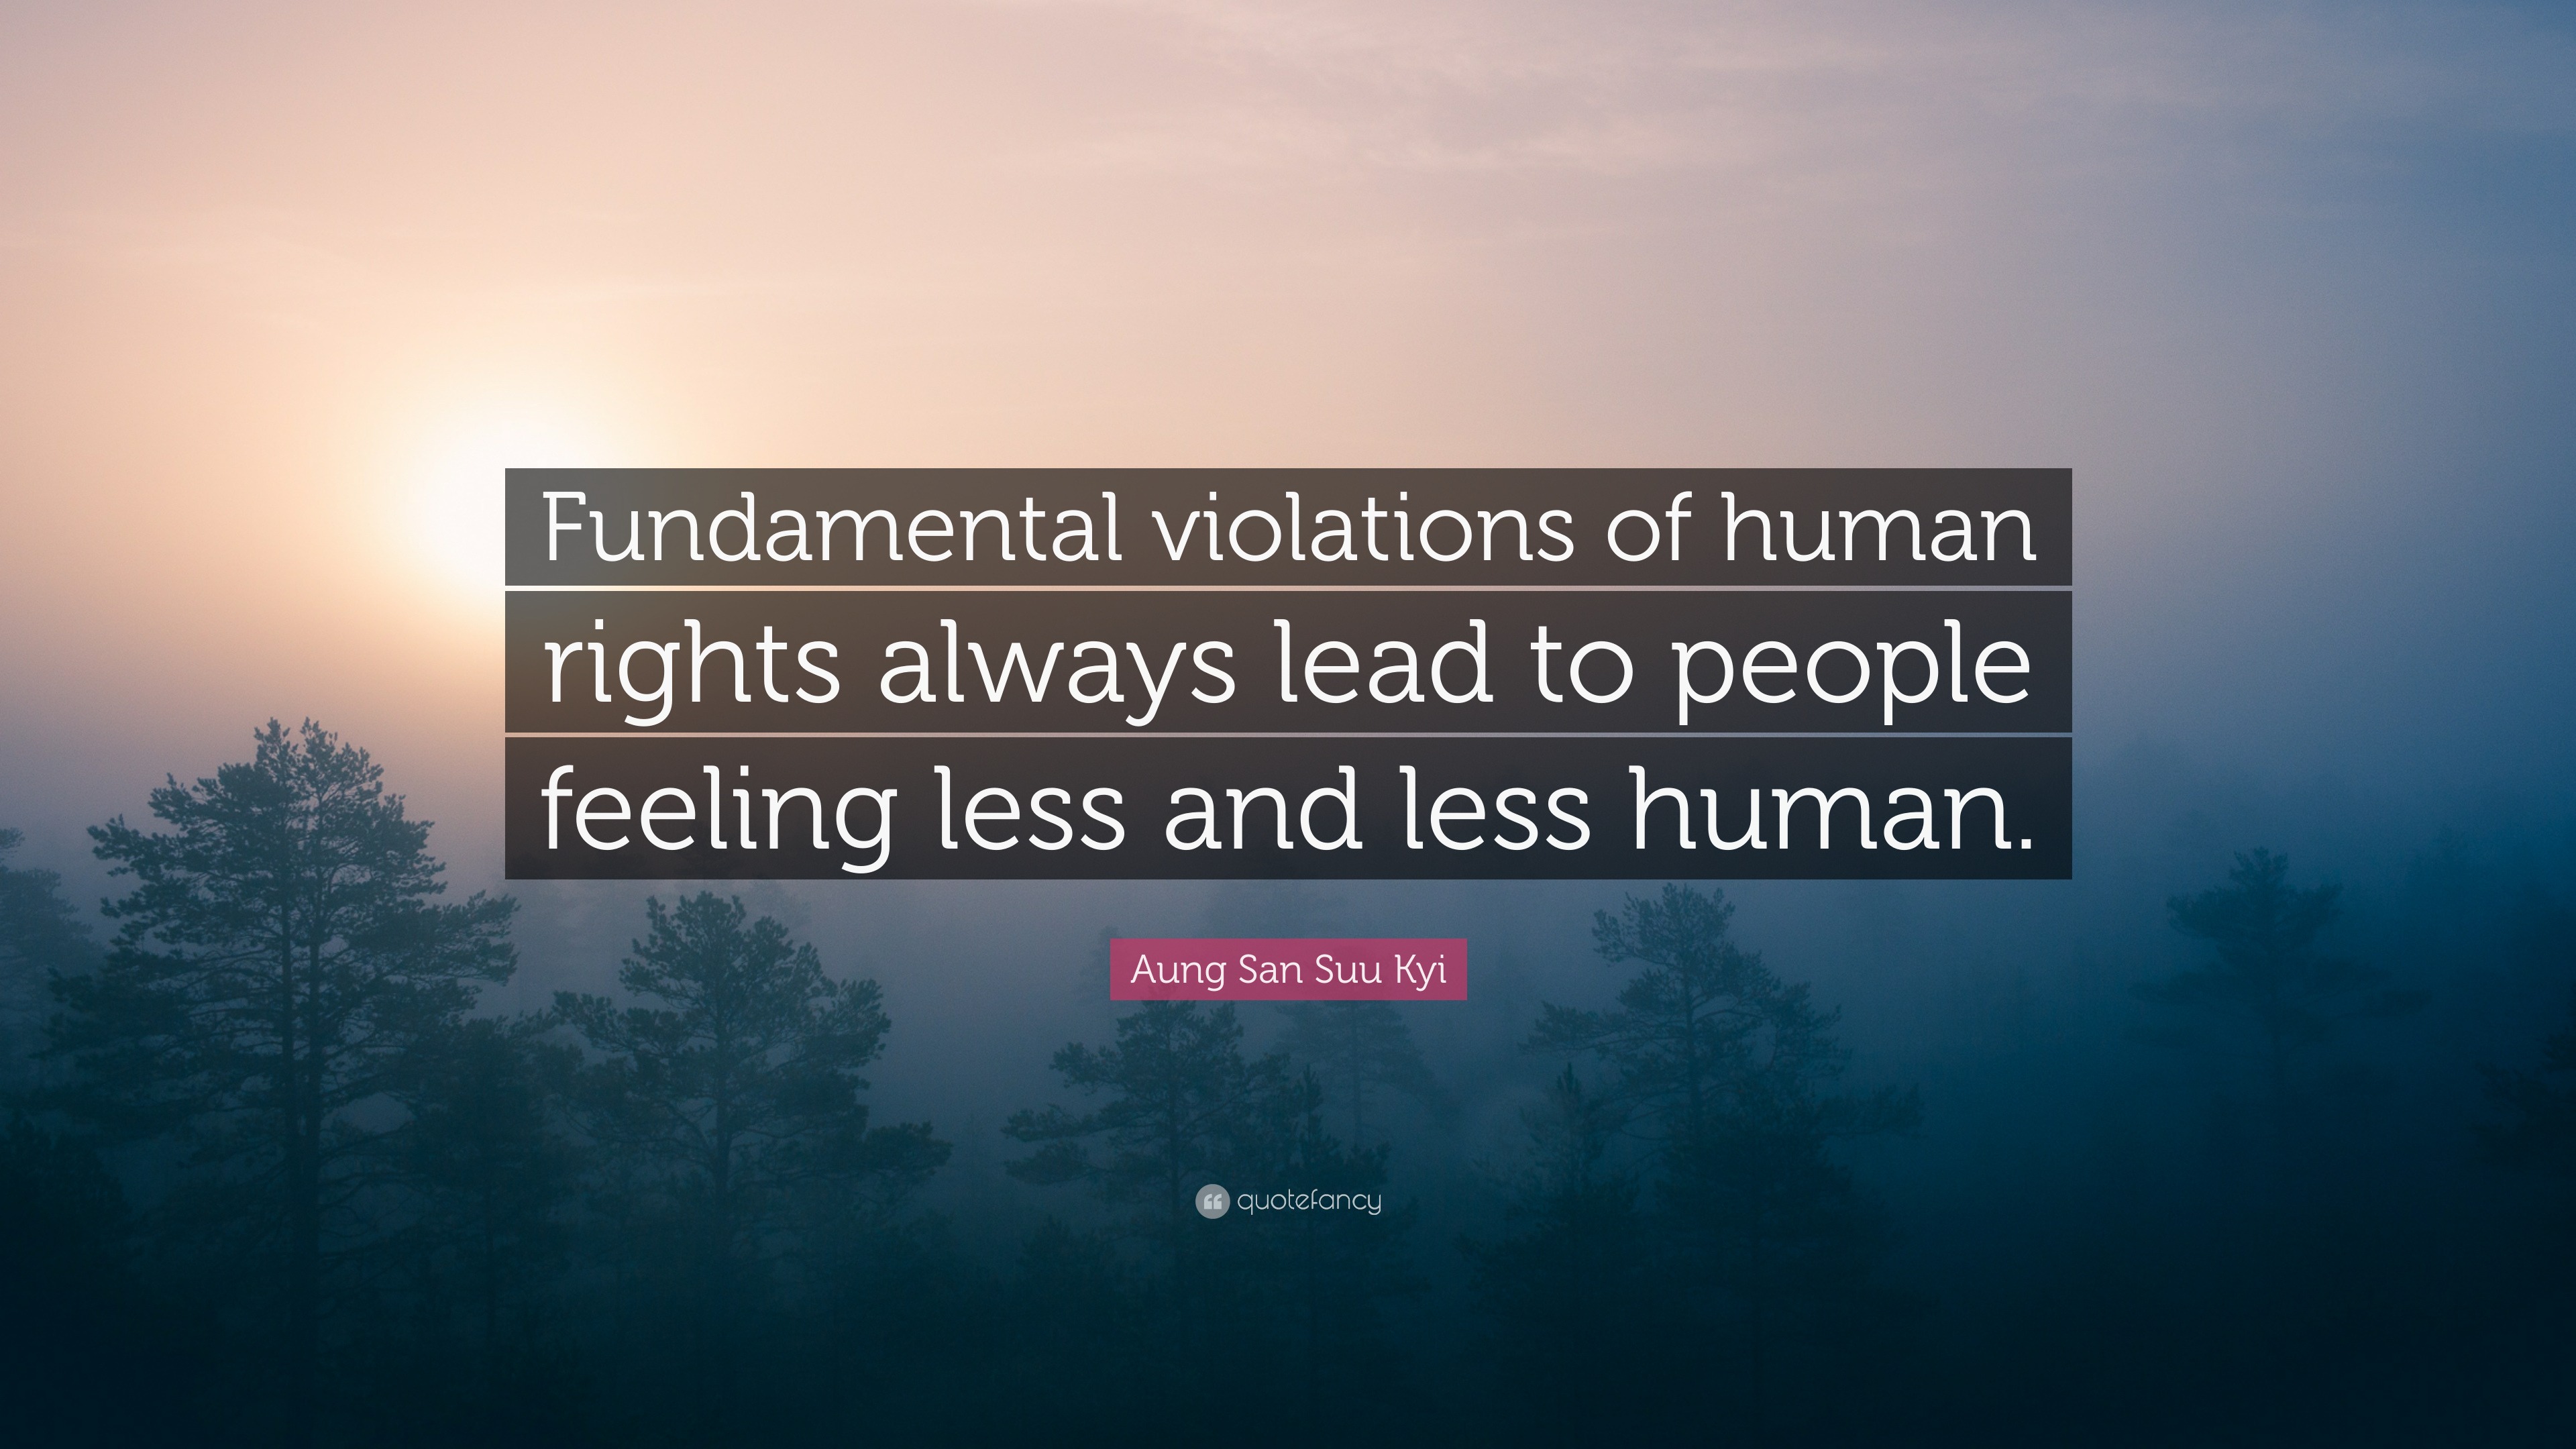 Spiksplinternieuw Aung San Suu Kyi Quote: “Fundamental violations of human rights UV-12